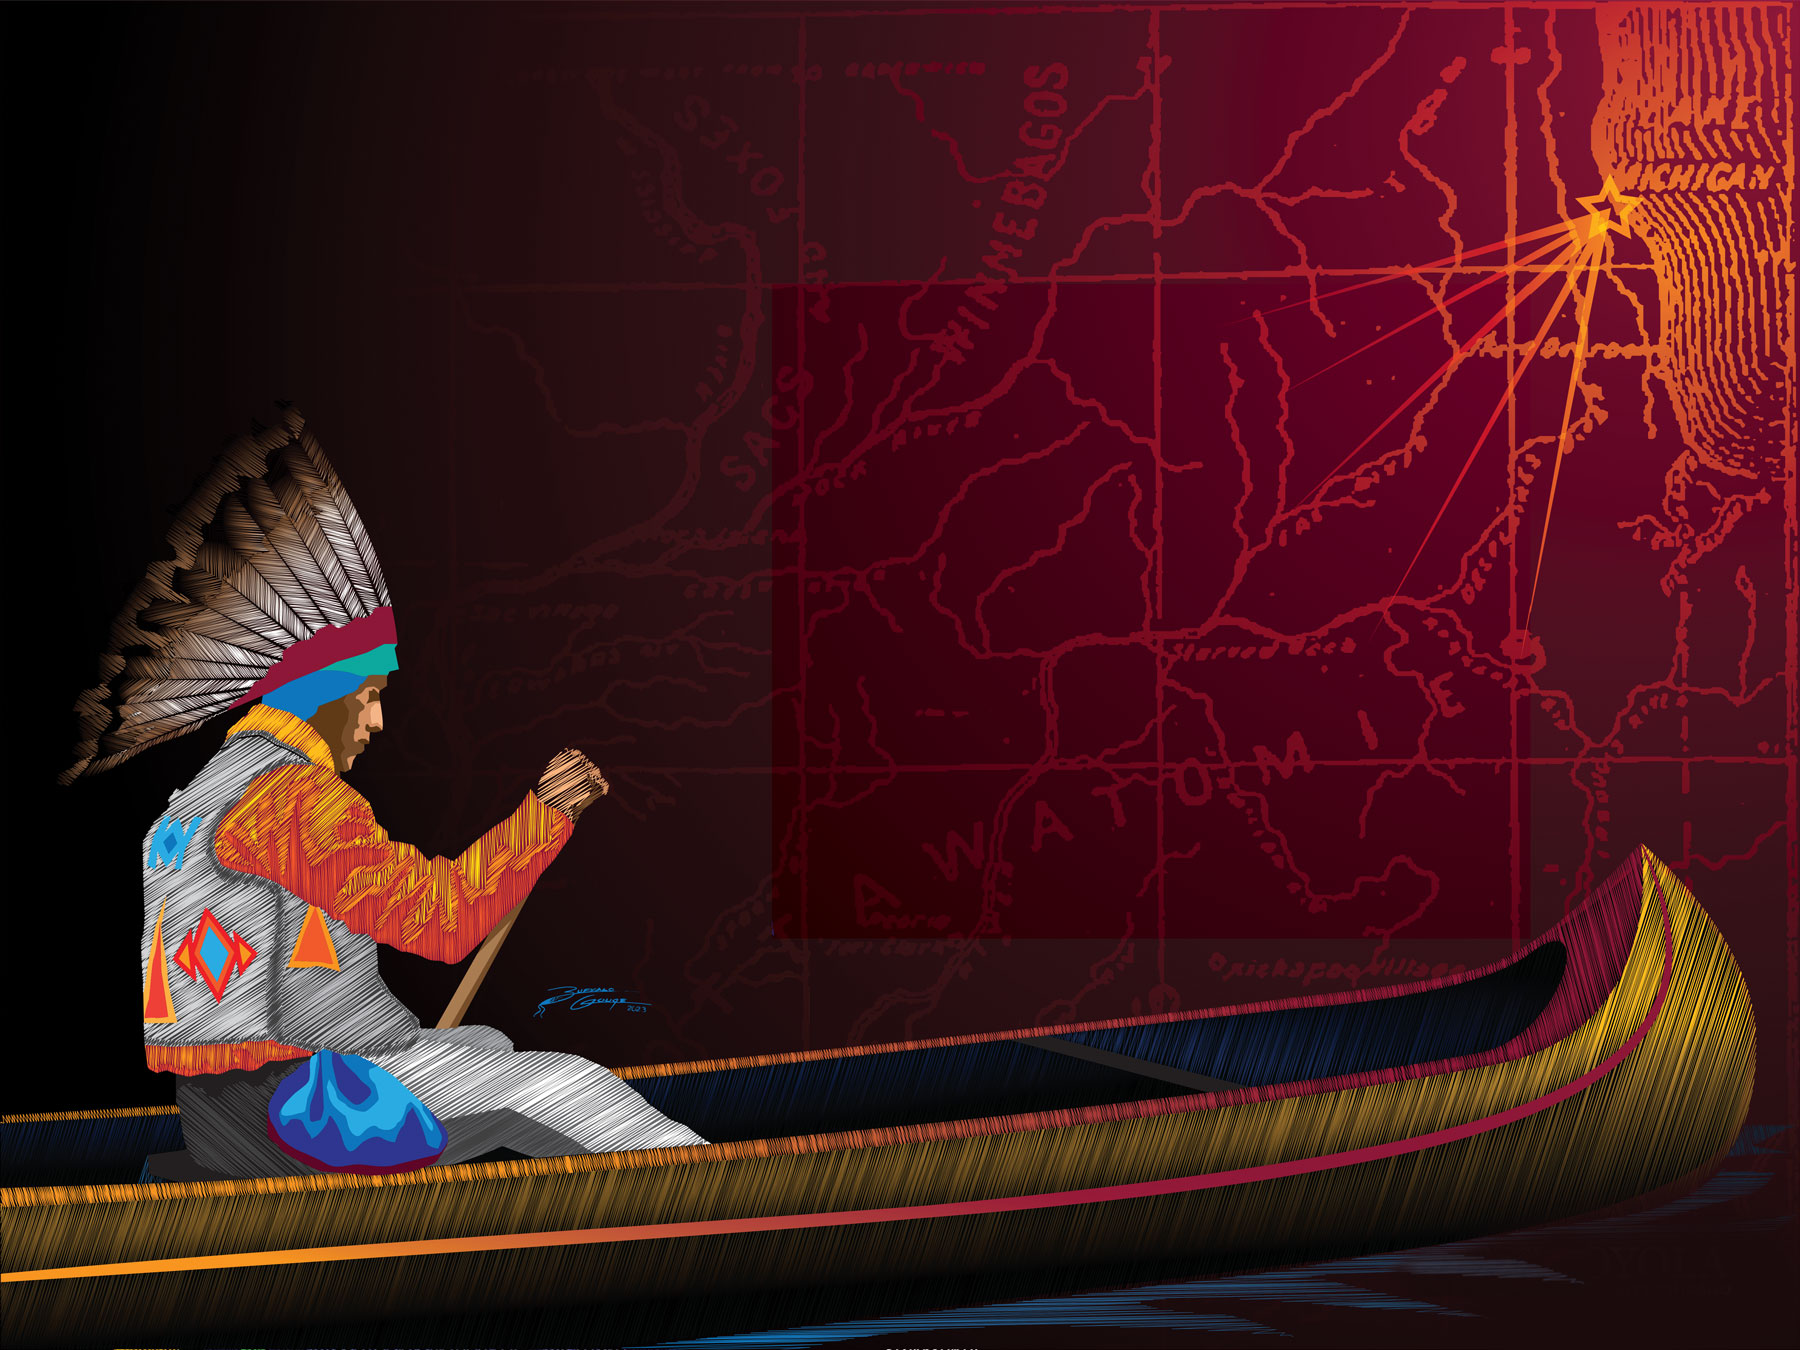 Expressive artwork of a Native American paddling a canoe by artist Buffalo Gouge